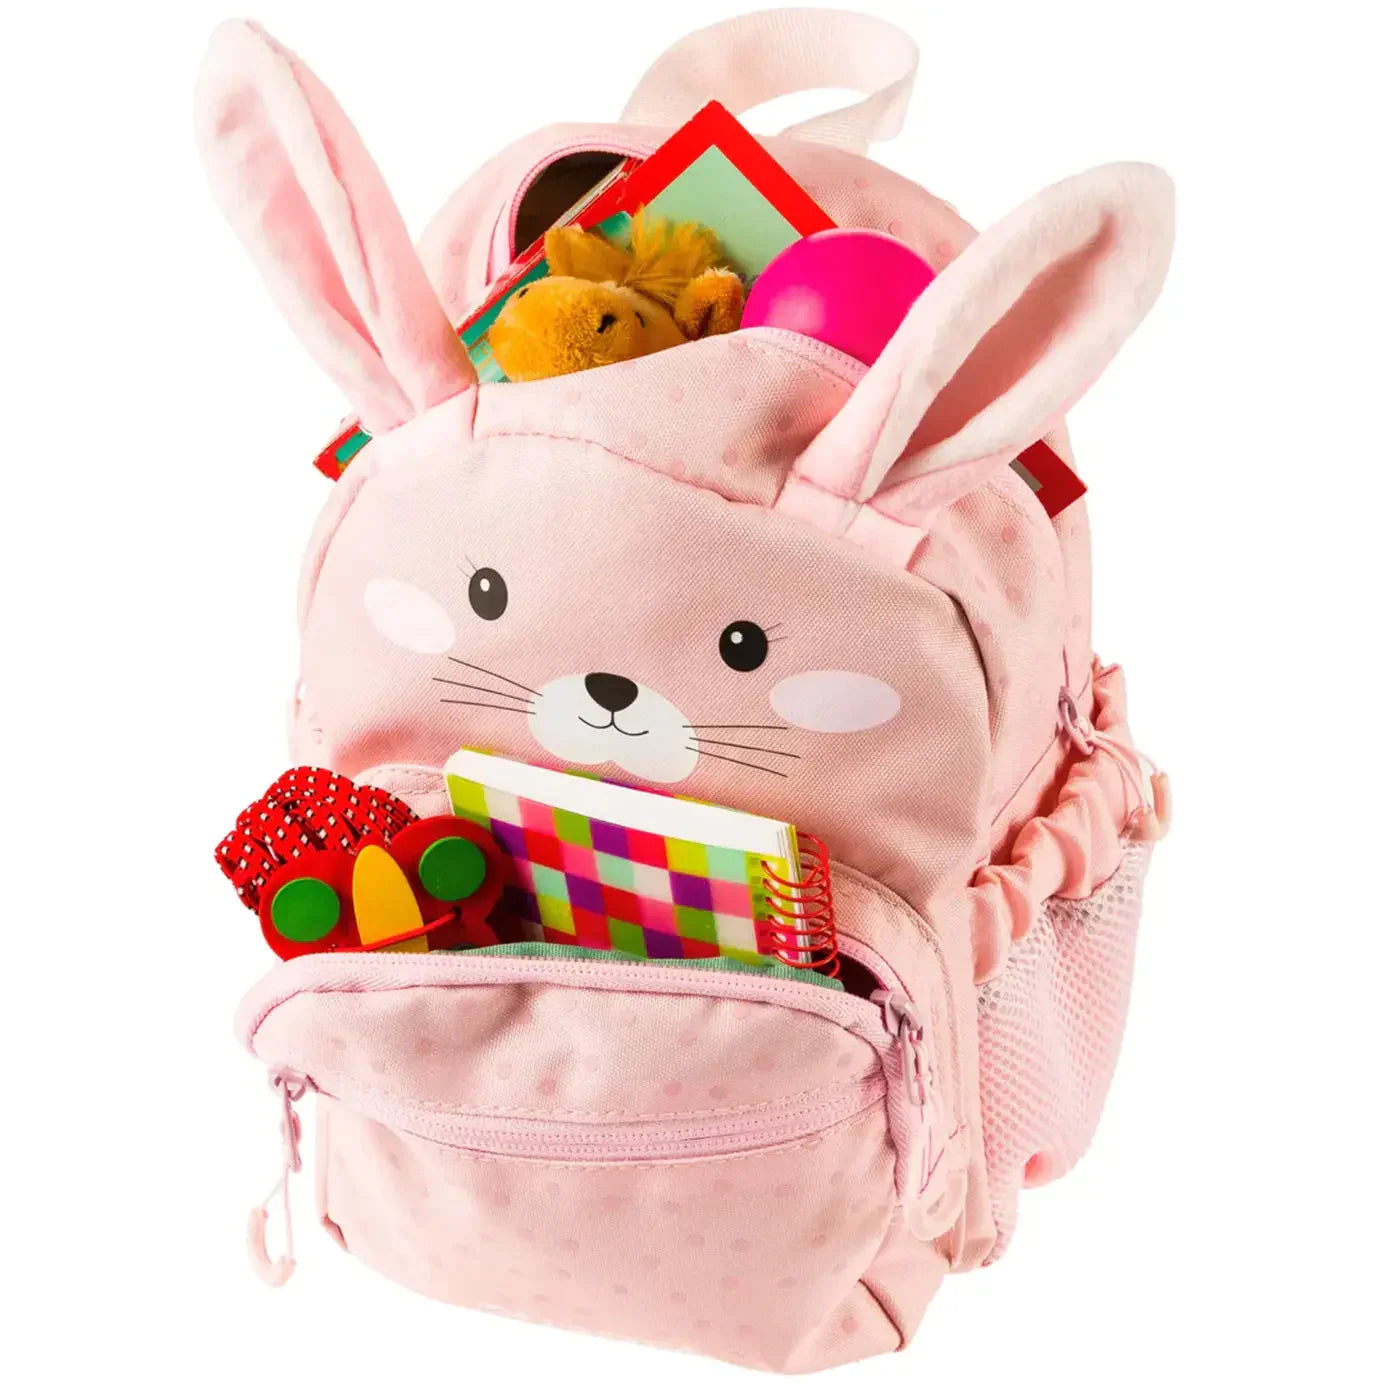 Schneiders Bags Bunny Kids Rucksack 27 cm - Pink